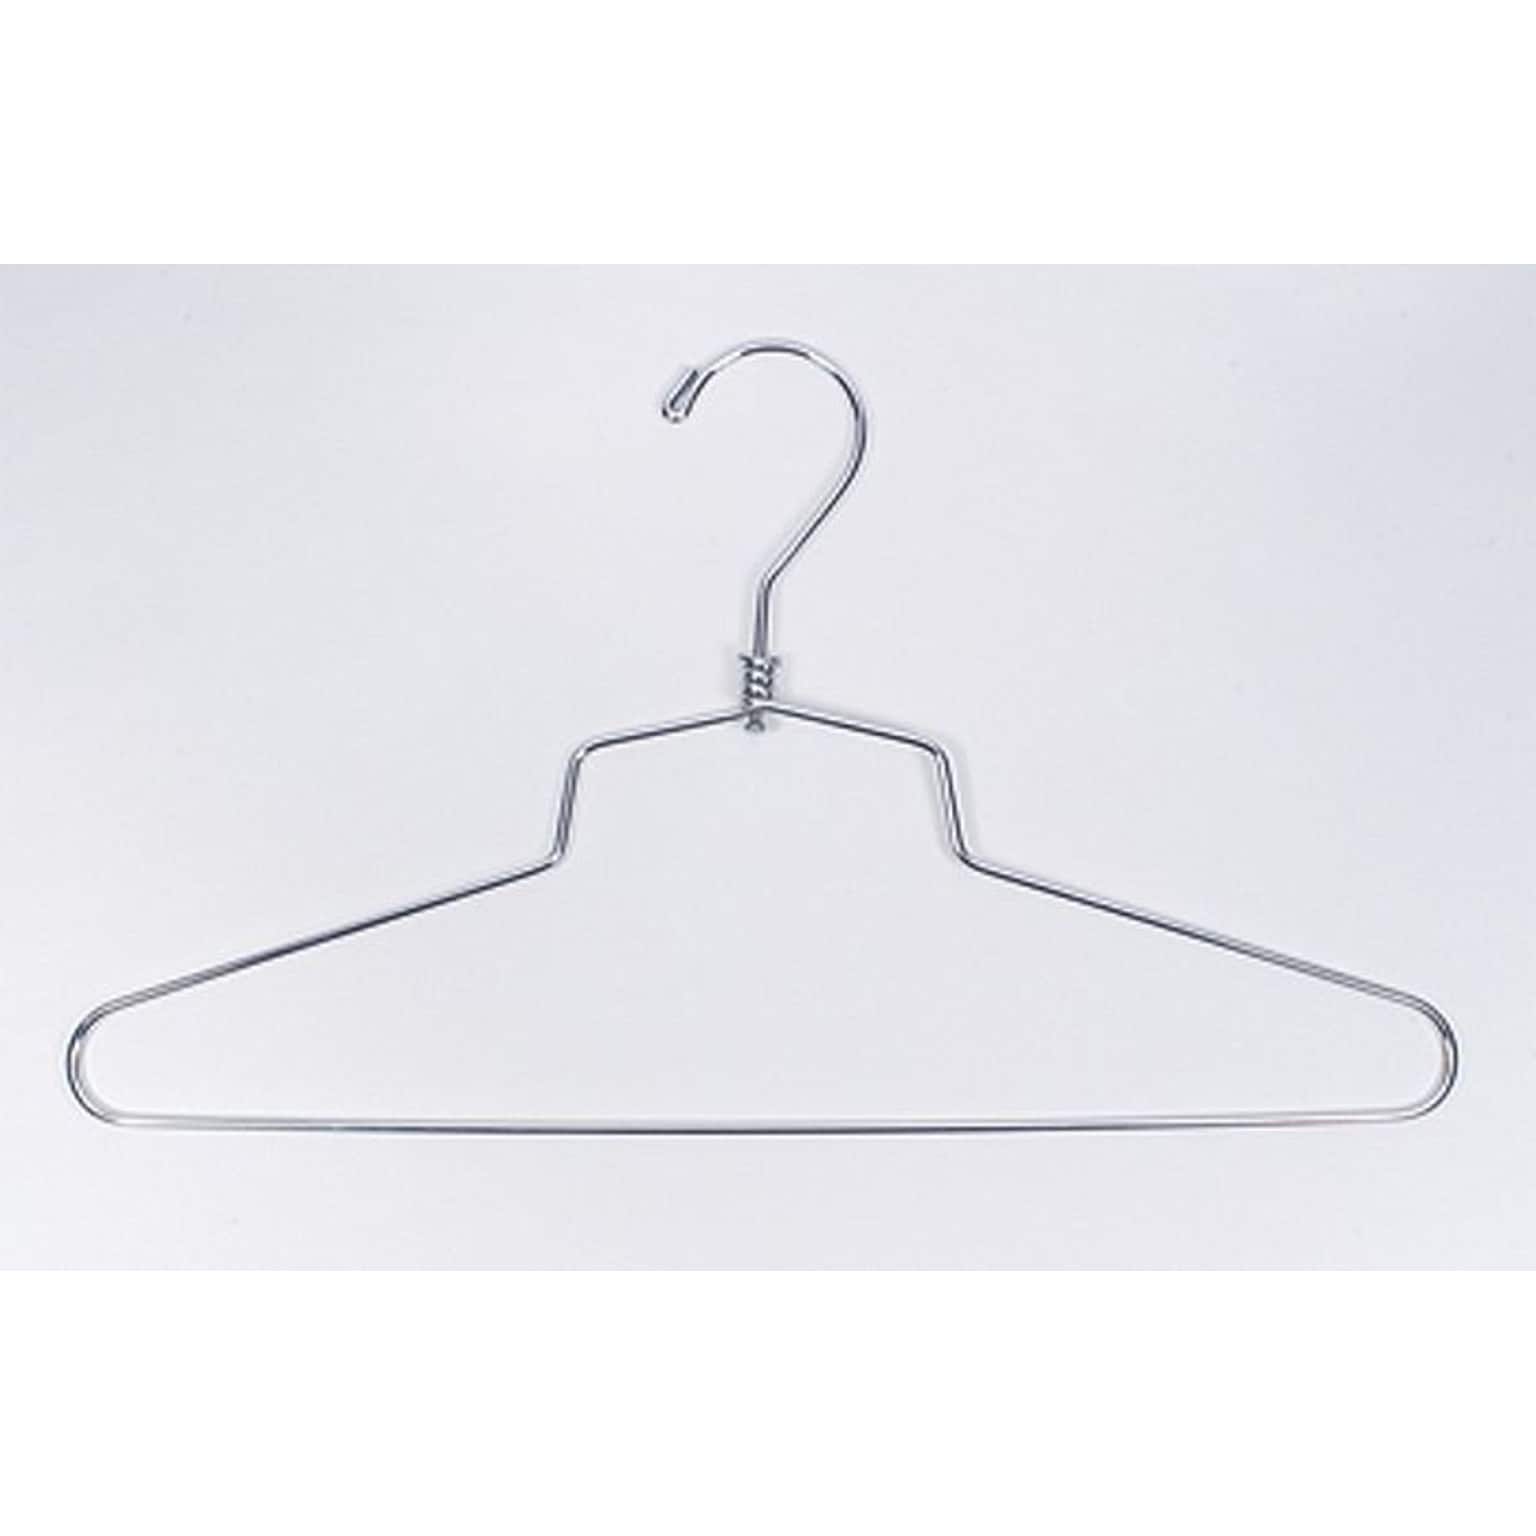 NAHANCO 14 Metal Shirt/Dress Hanger, Chrome, 100/Pack